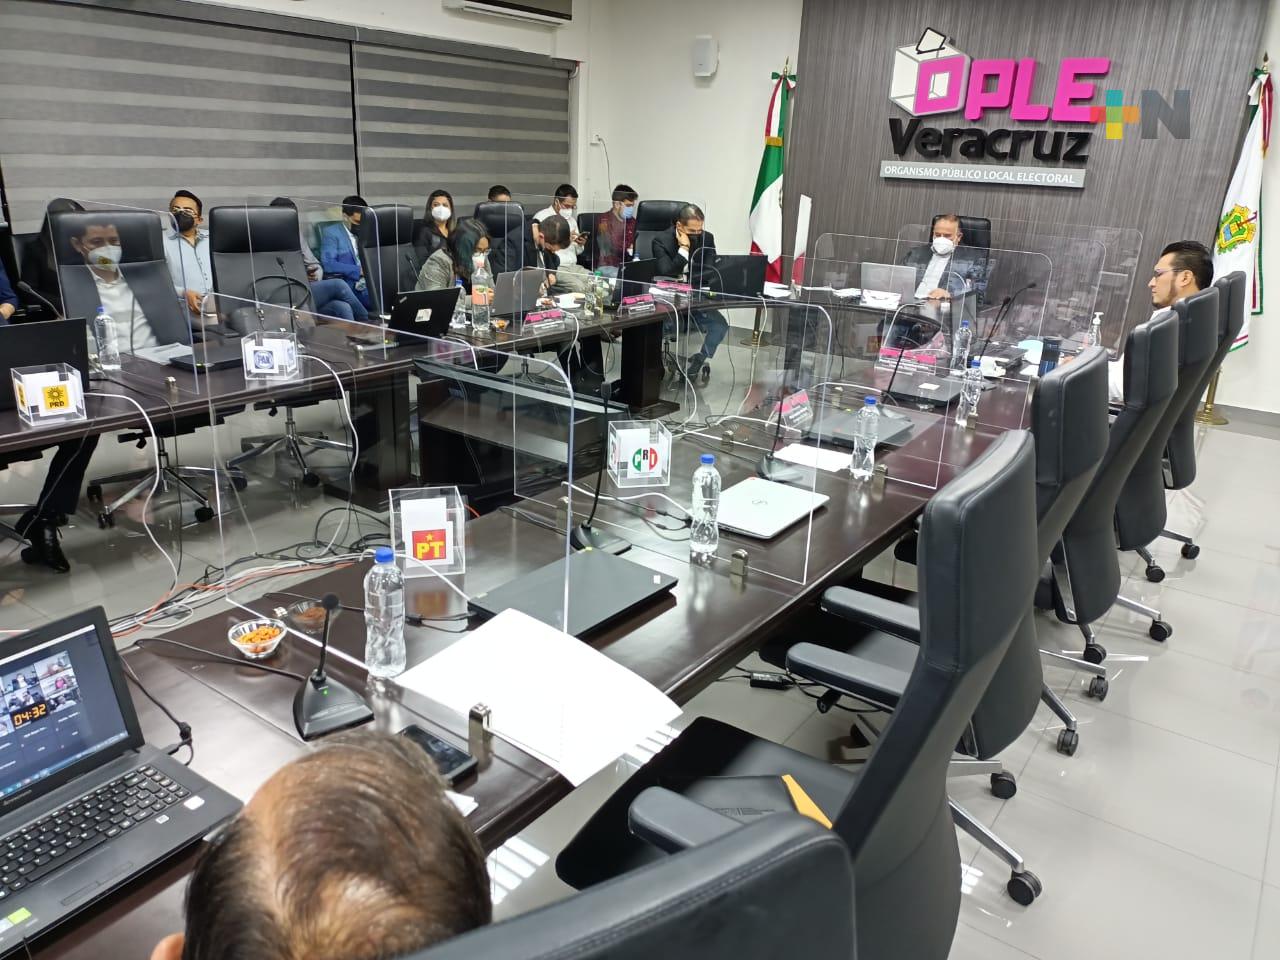 INE lanzó convocatoria para elegir consejeros del OPLE Veracruz